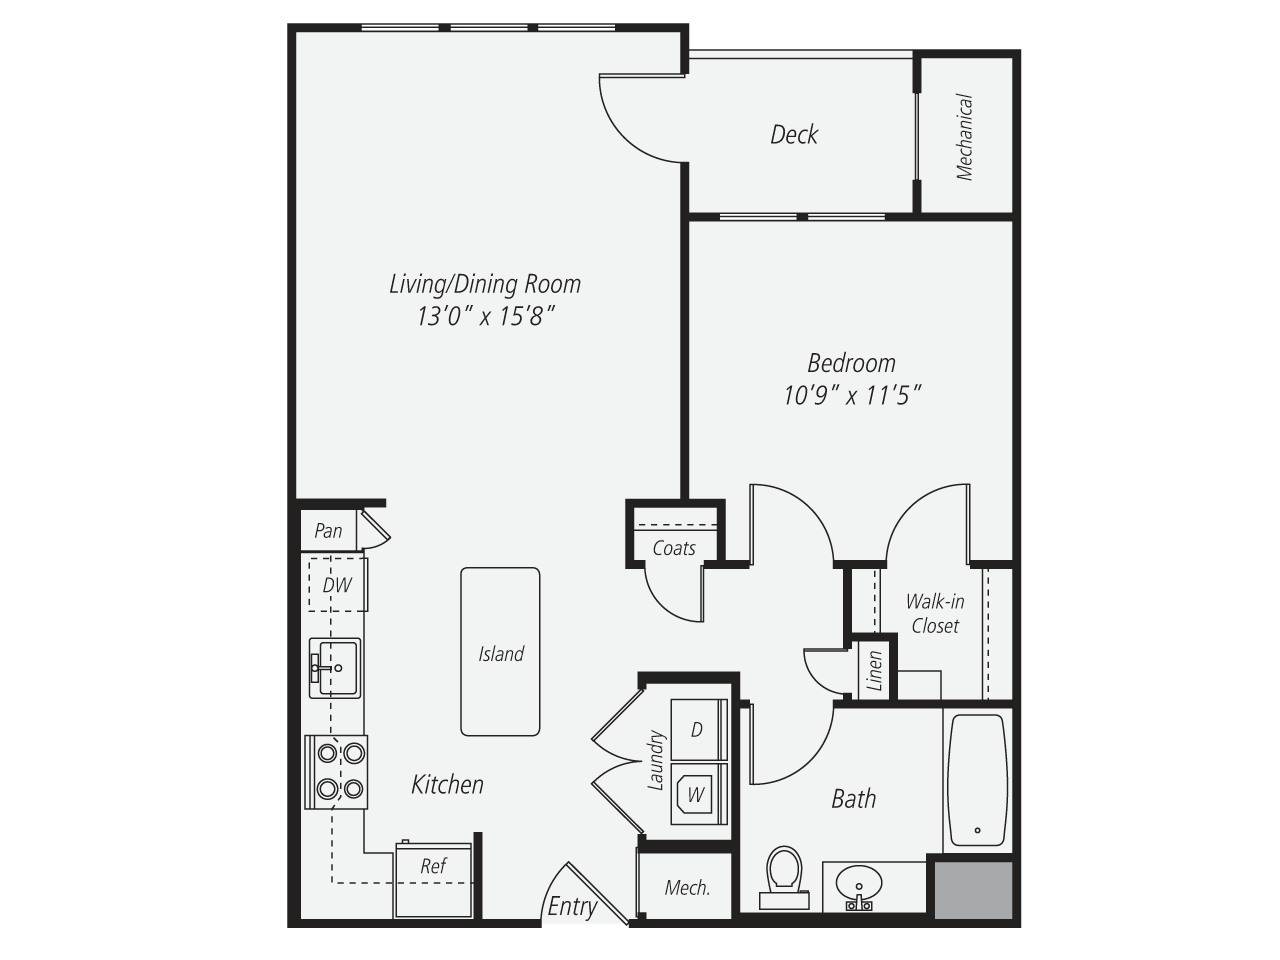 Floorplan for Apartment #237, 1 bedroom unit at Halstead Norwalk